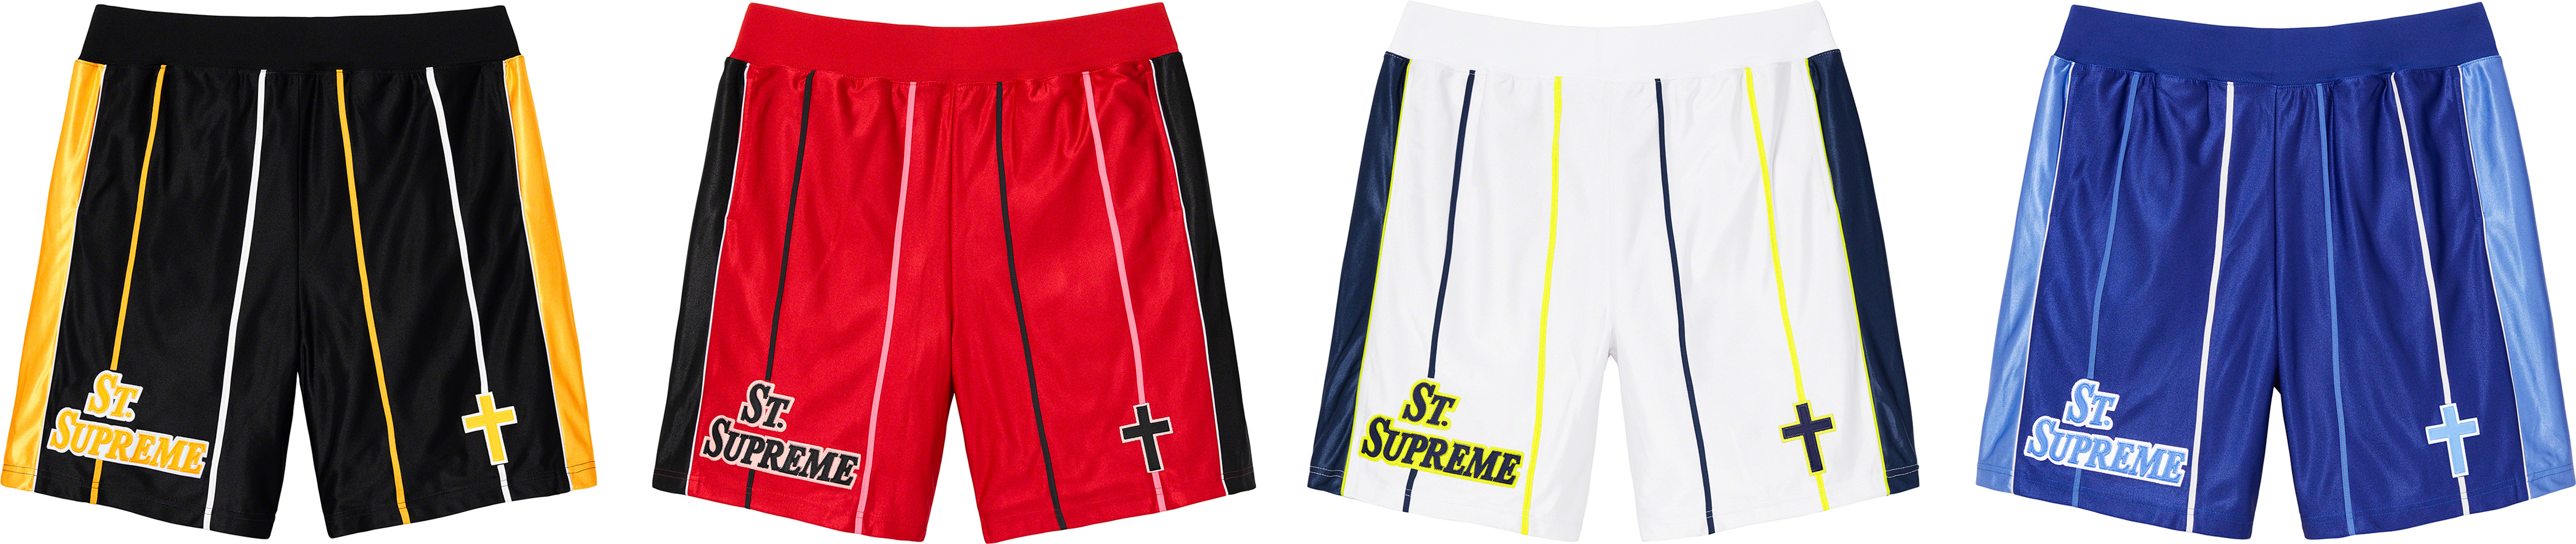 Supreme Basketball Shorts Top Sellers, 59% OFF | espirituviajero.com